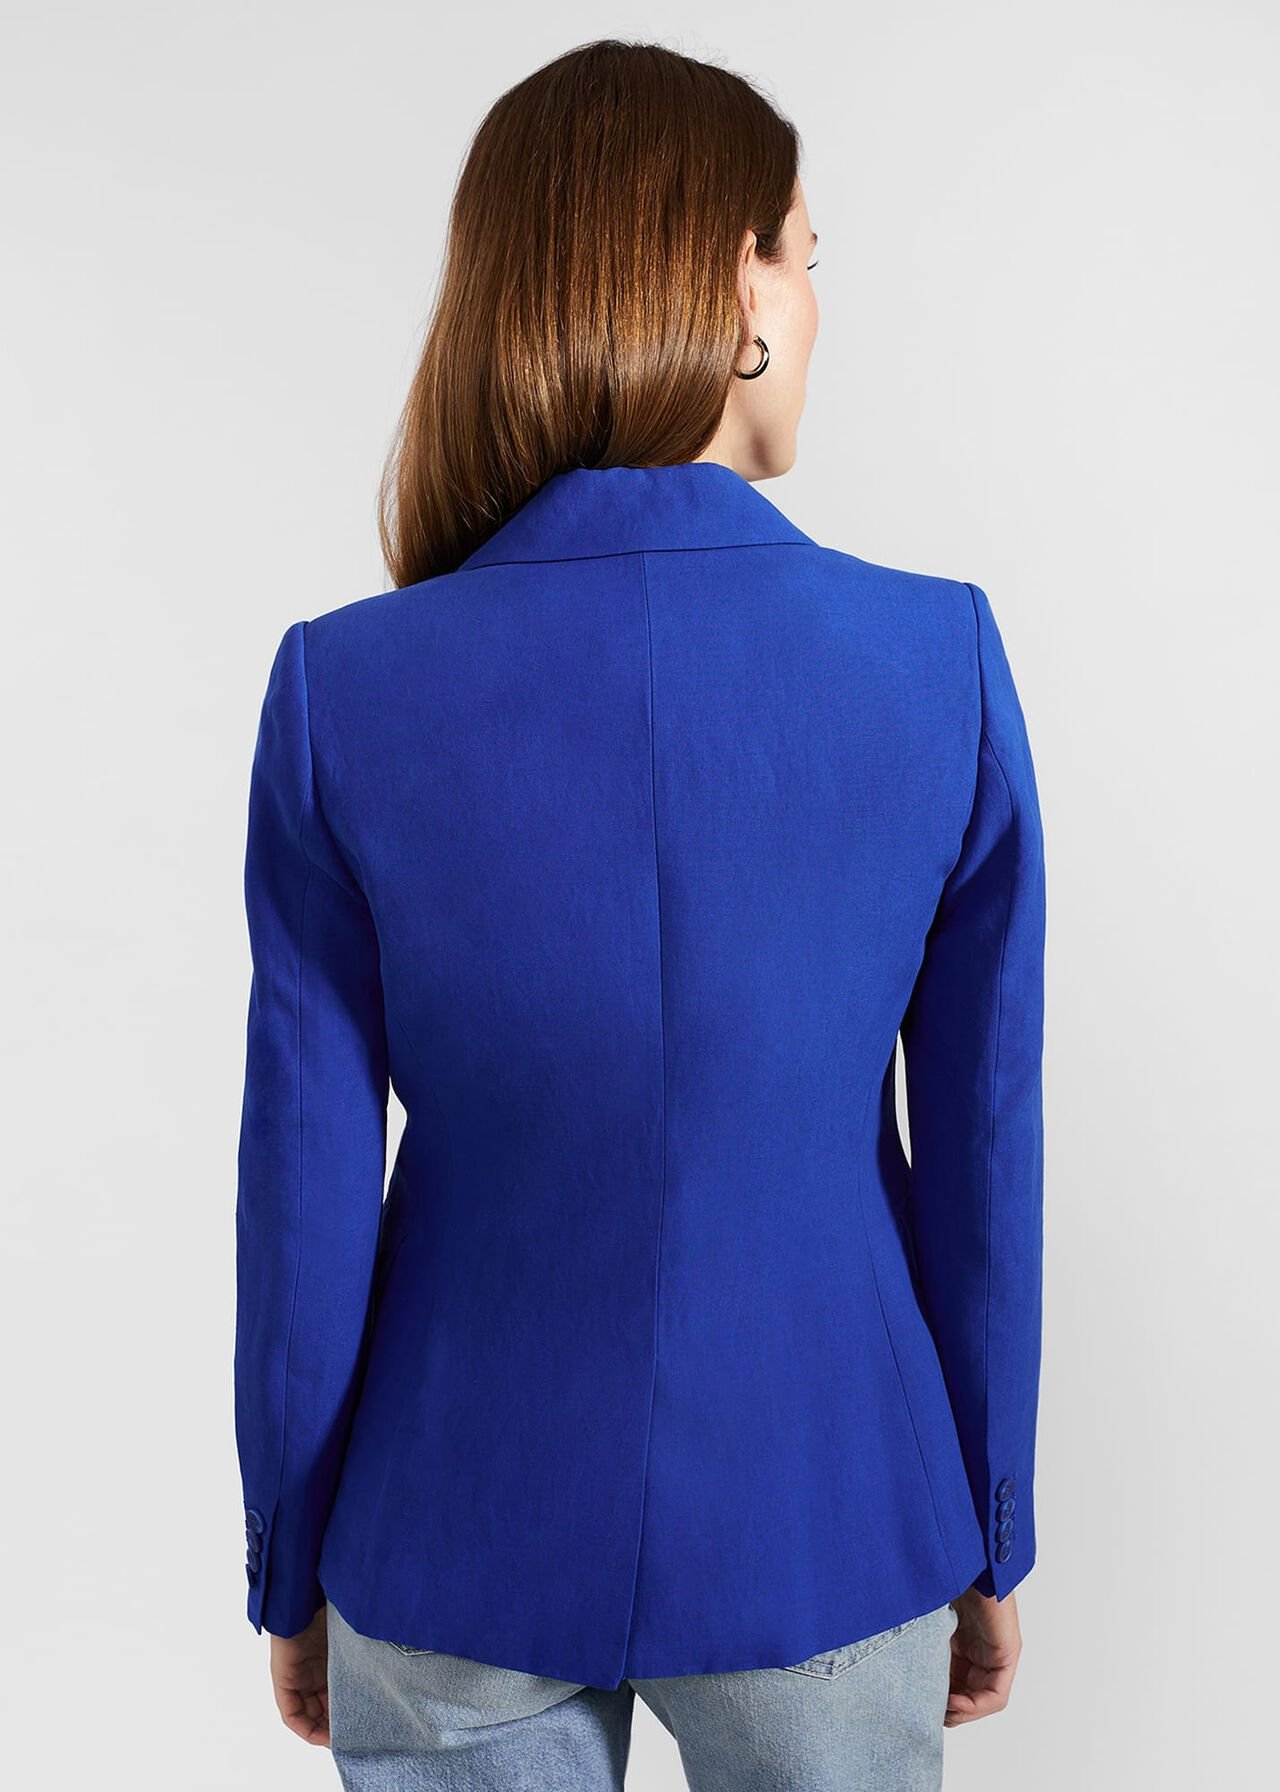 Fletcher Silk Linen Jacket, Lapis Blue, hi-res